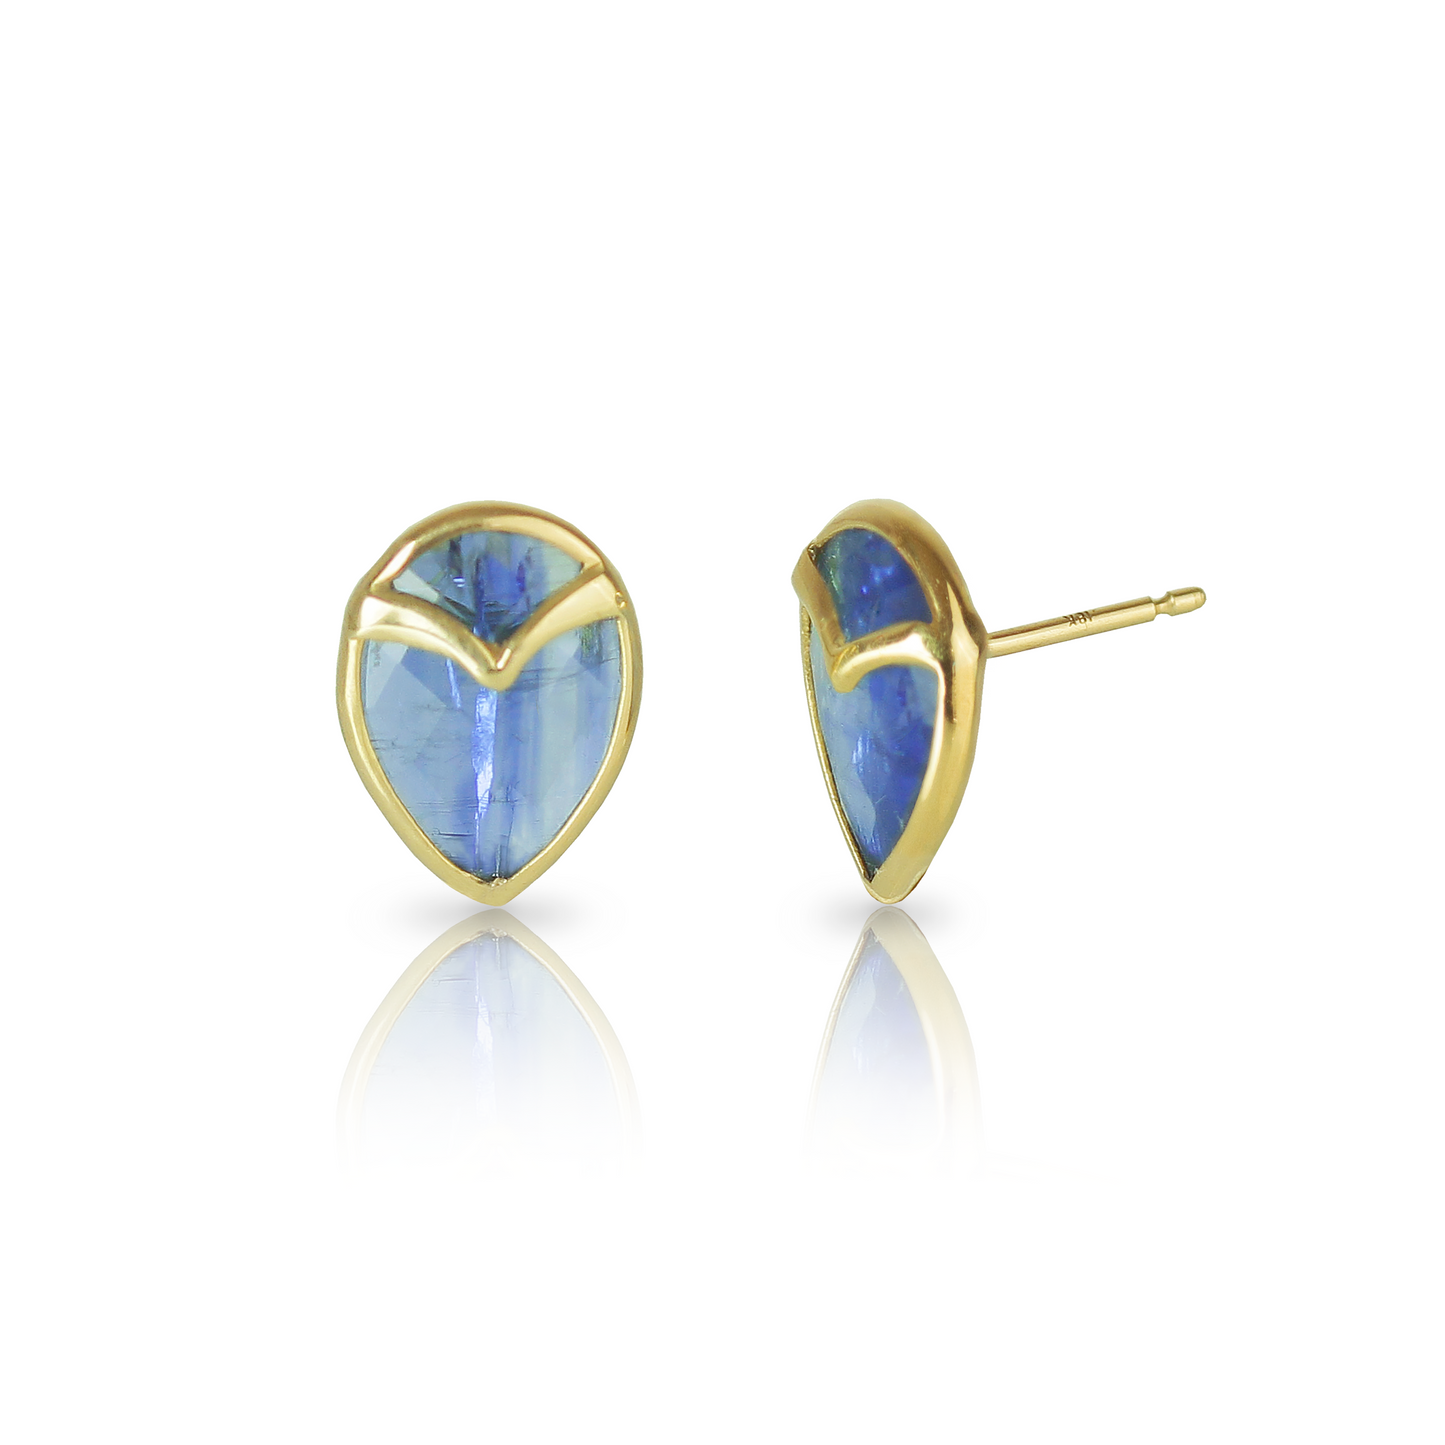 A pair of stud earrings with teardrop-shaped, Blue Kyanite, bezel set with yellow gold owl beak detail